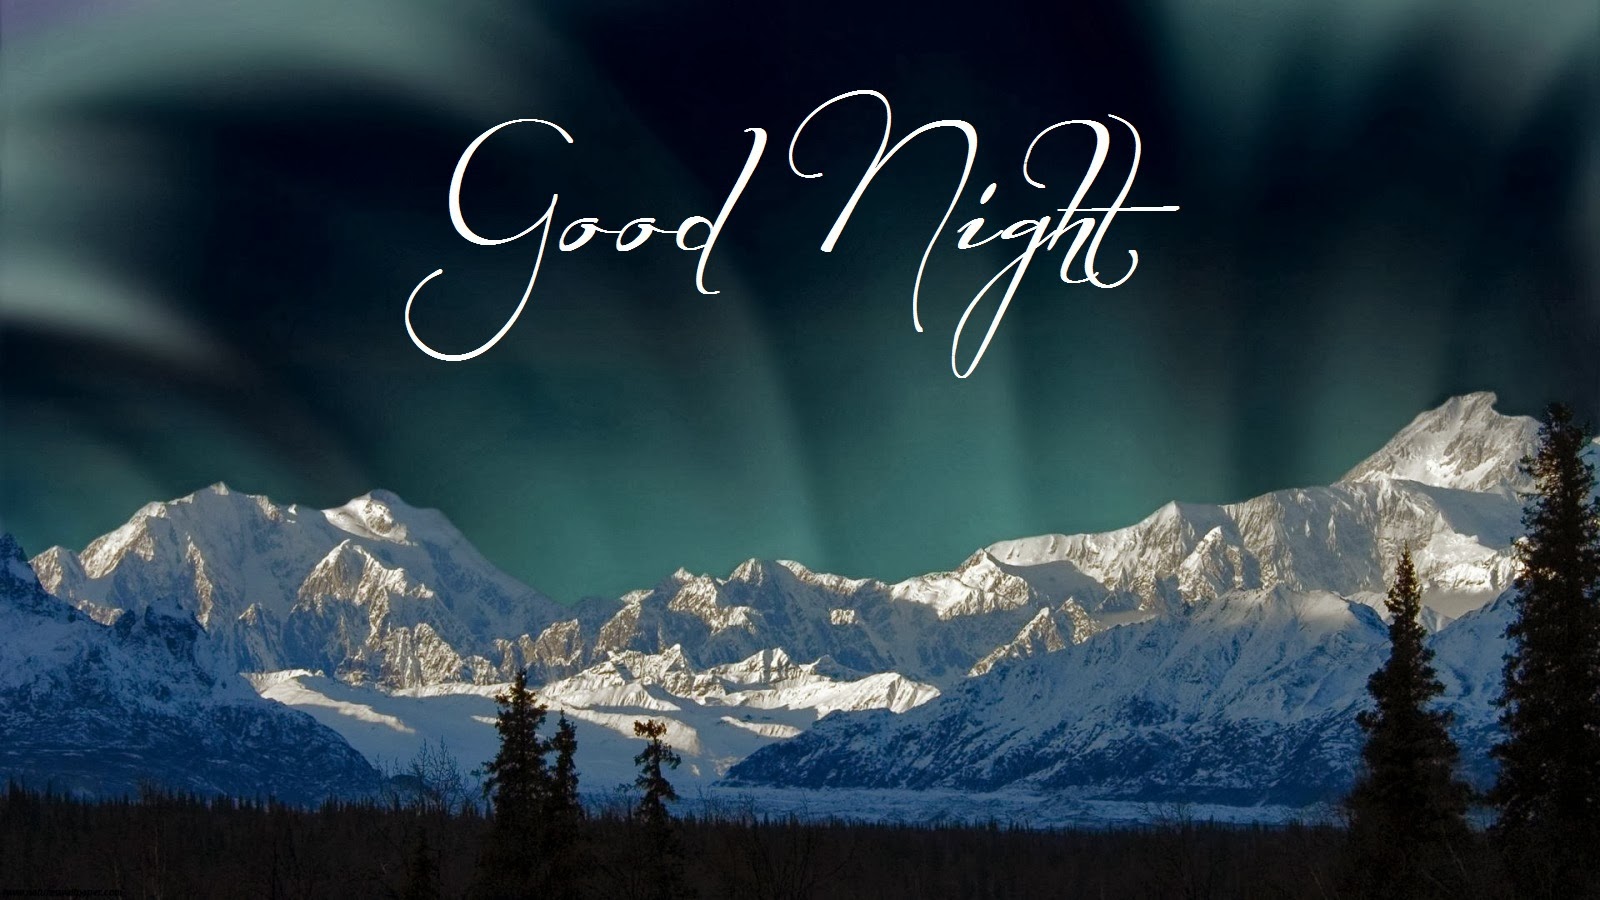 Sweet Dreams Good Night Love Wallpaper Desktop Background